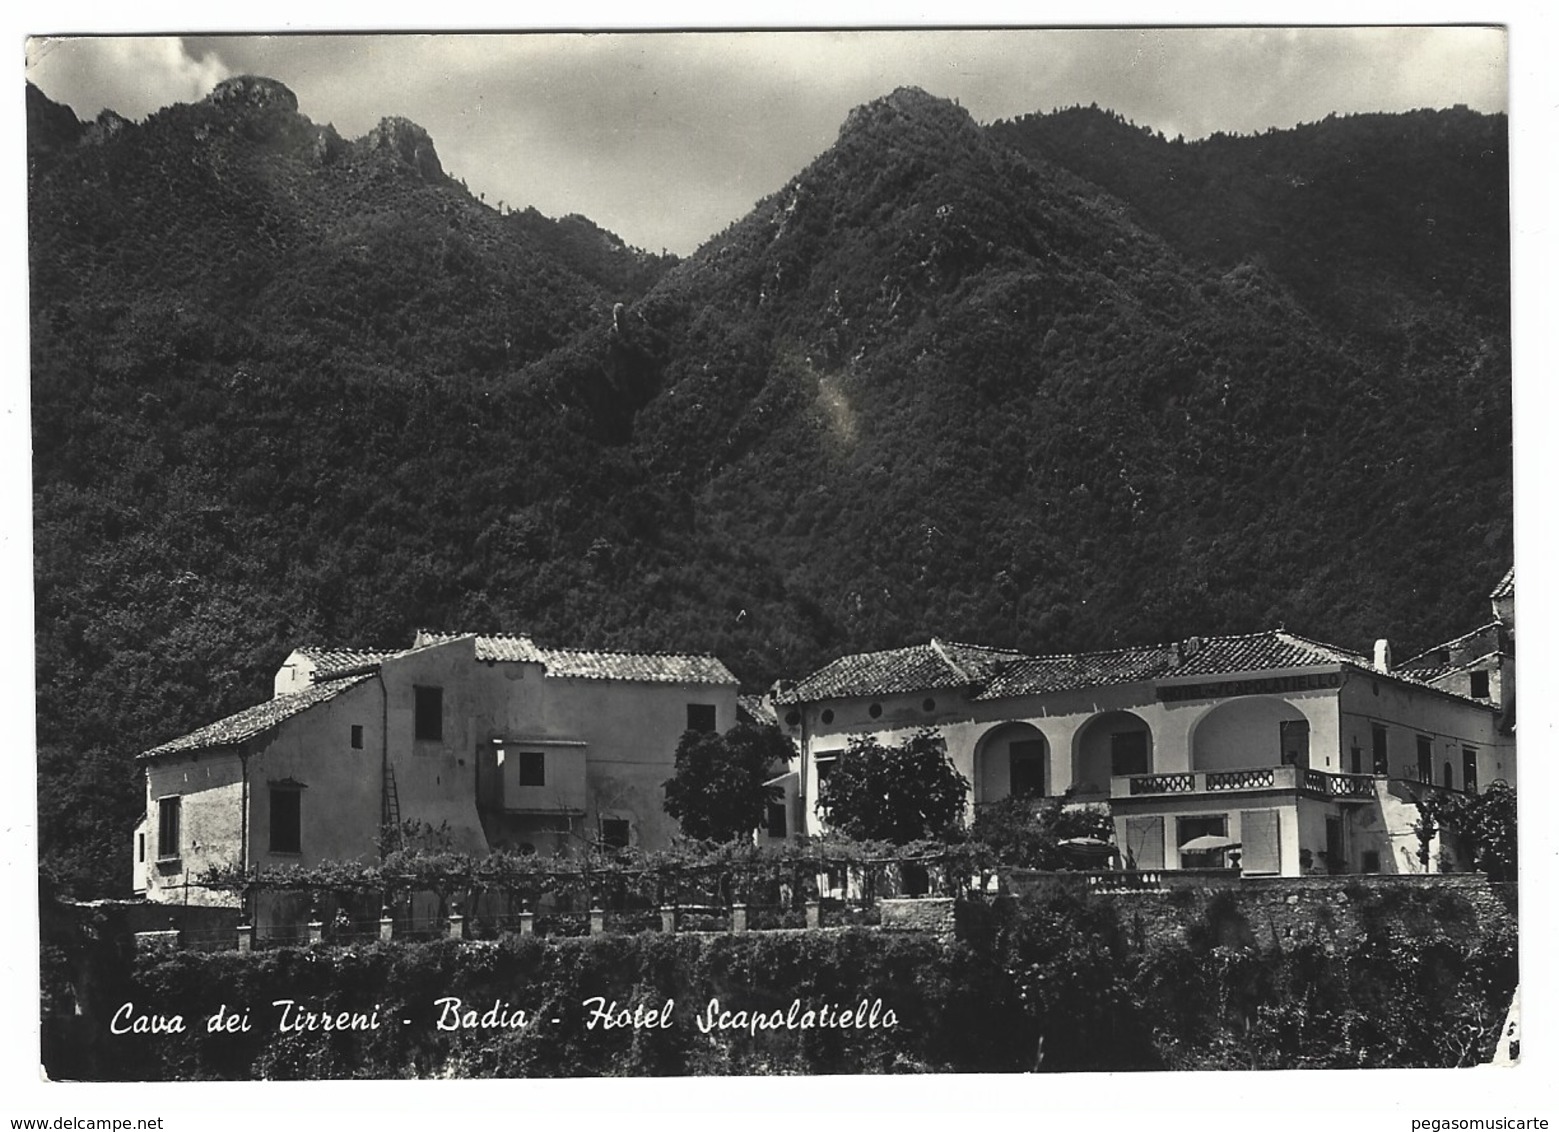 2953 - CAVA DEI TIRRENI BADIA HOTEL SCAPOLATIELLO 1954 - Cava De' Tirreni